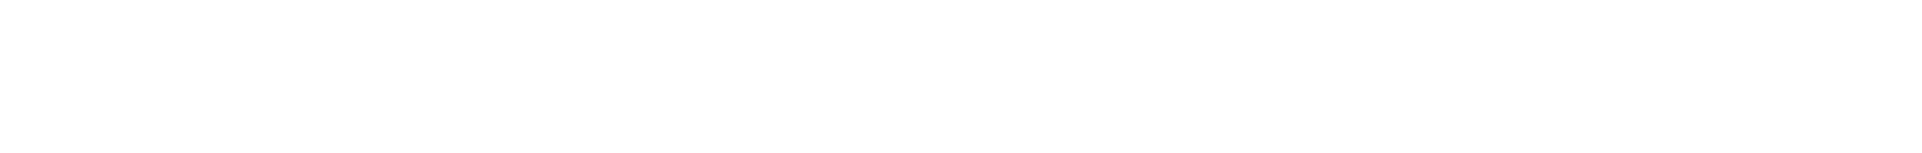 Drupal | Media and Publishing